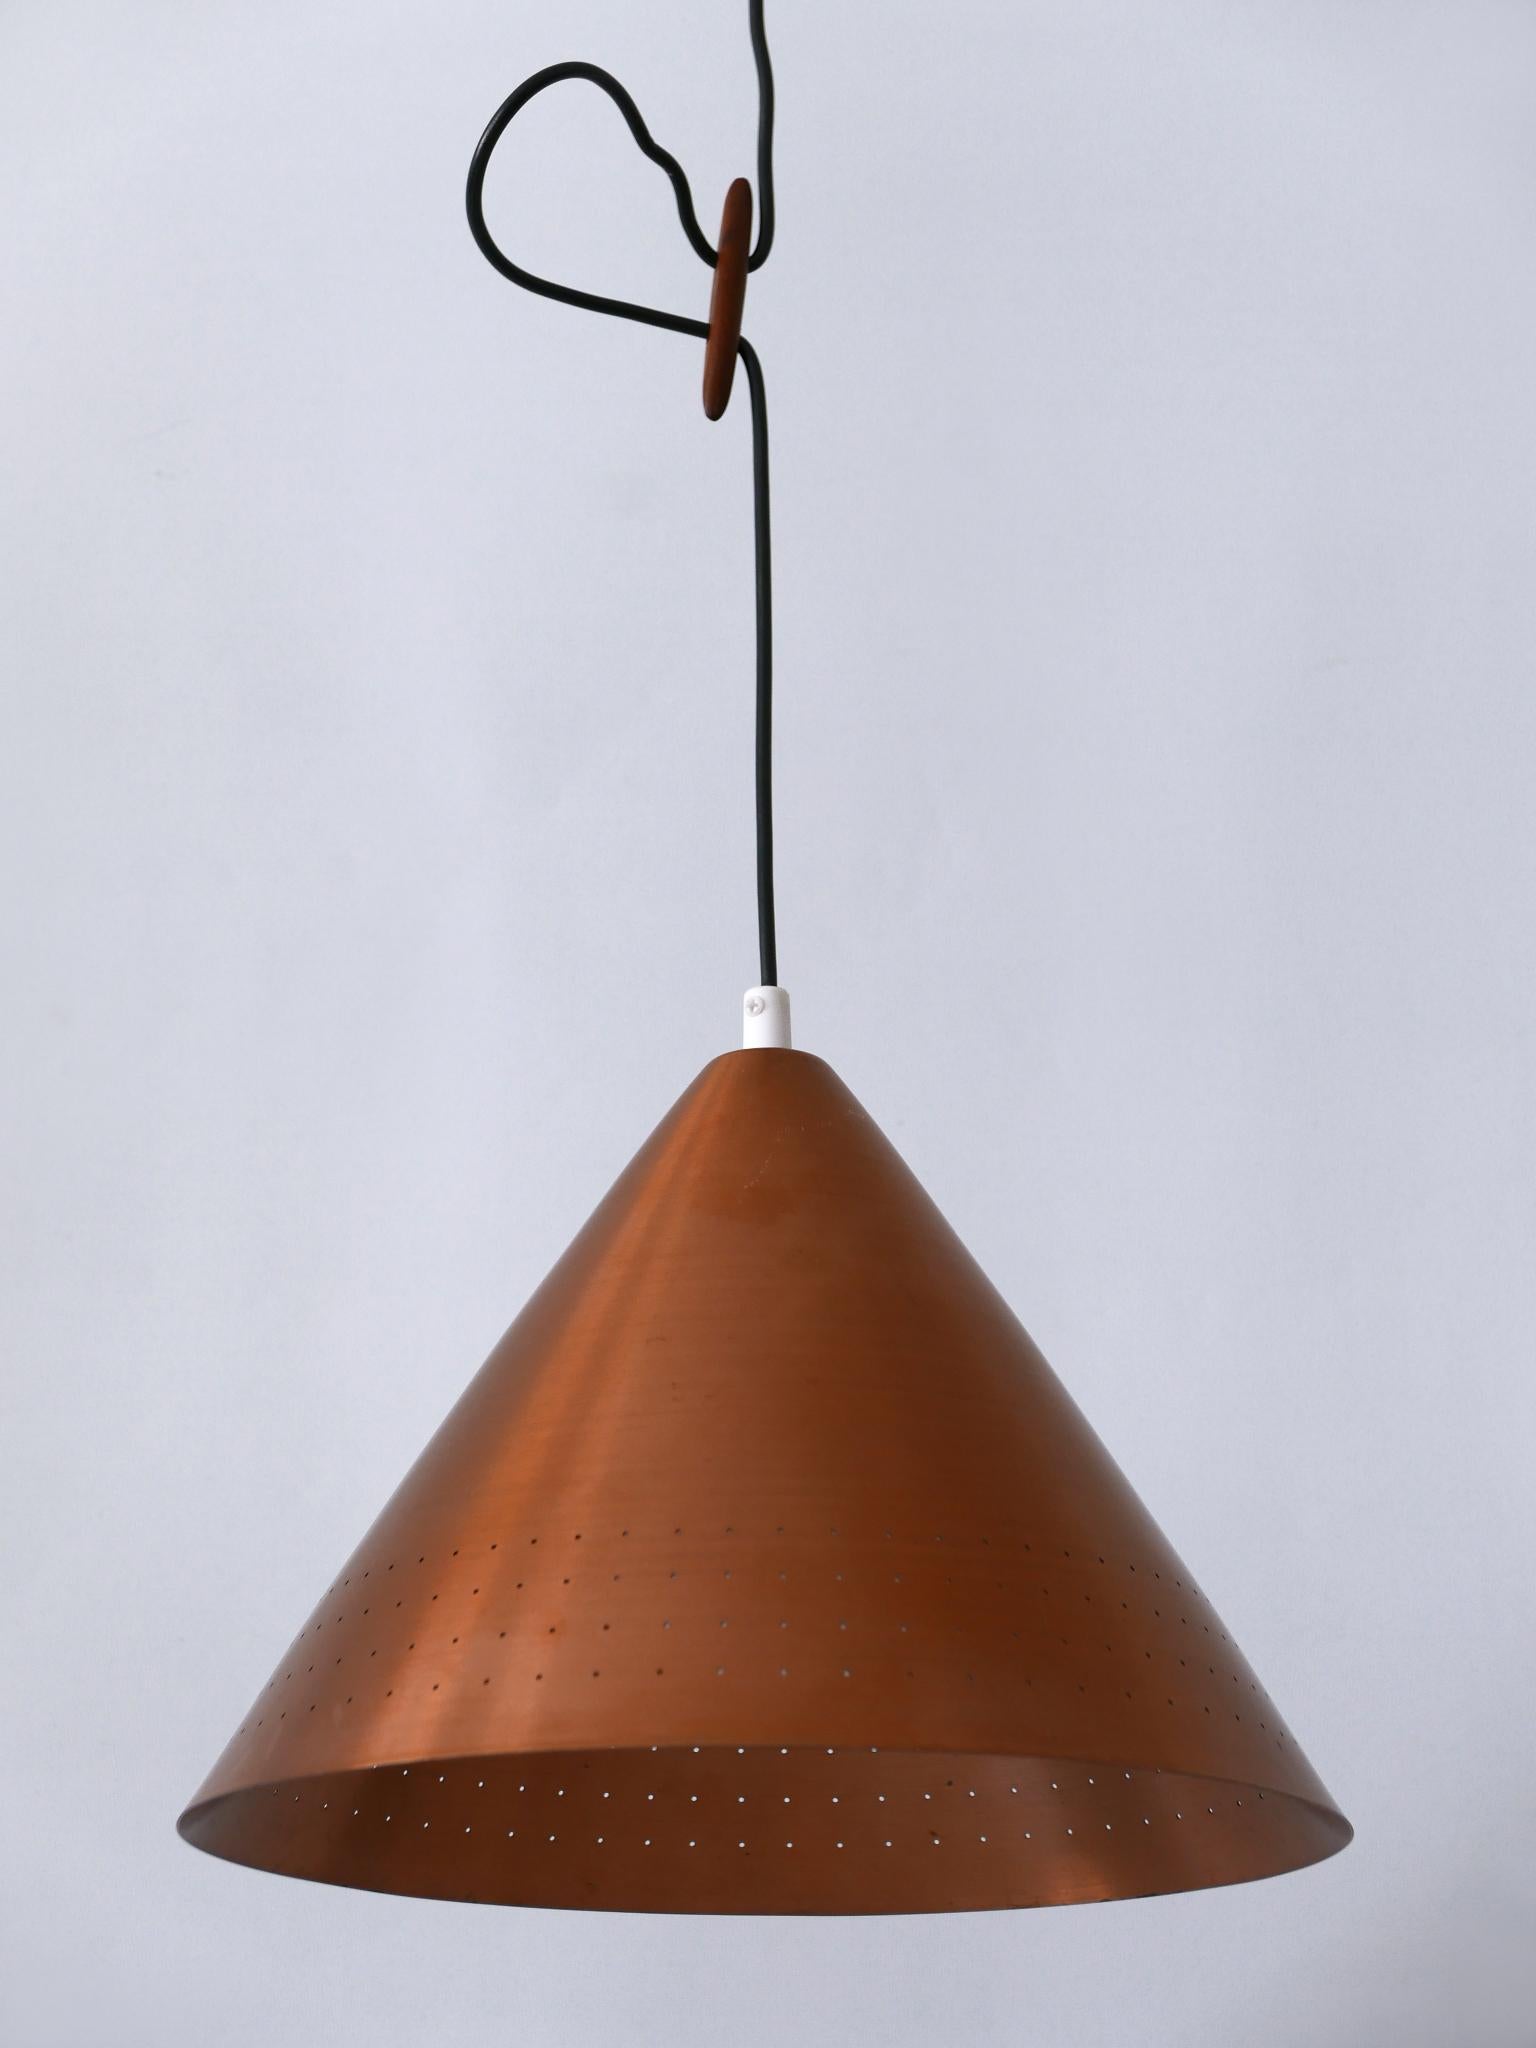 Rare Mid-Century Modern Scandinavian Copper Pendant Lamp or Hanging Light  1960s For Sale 7